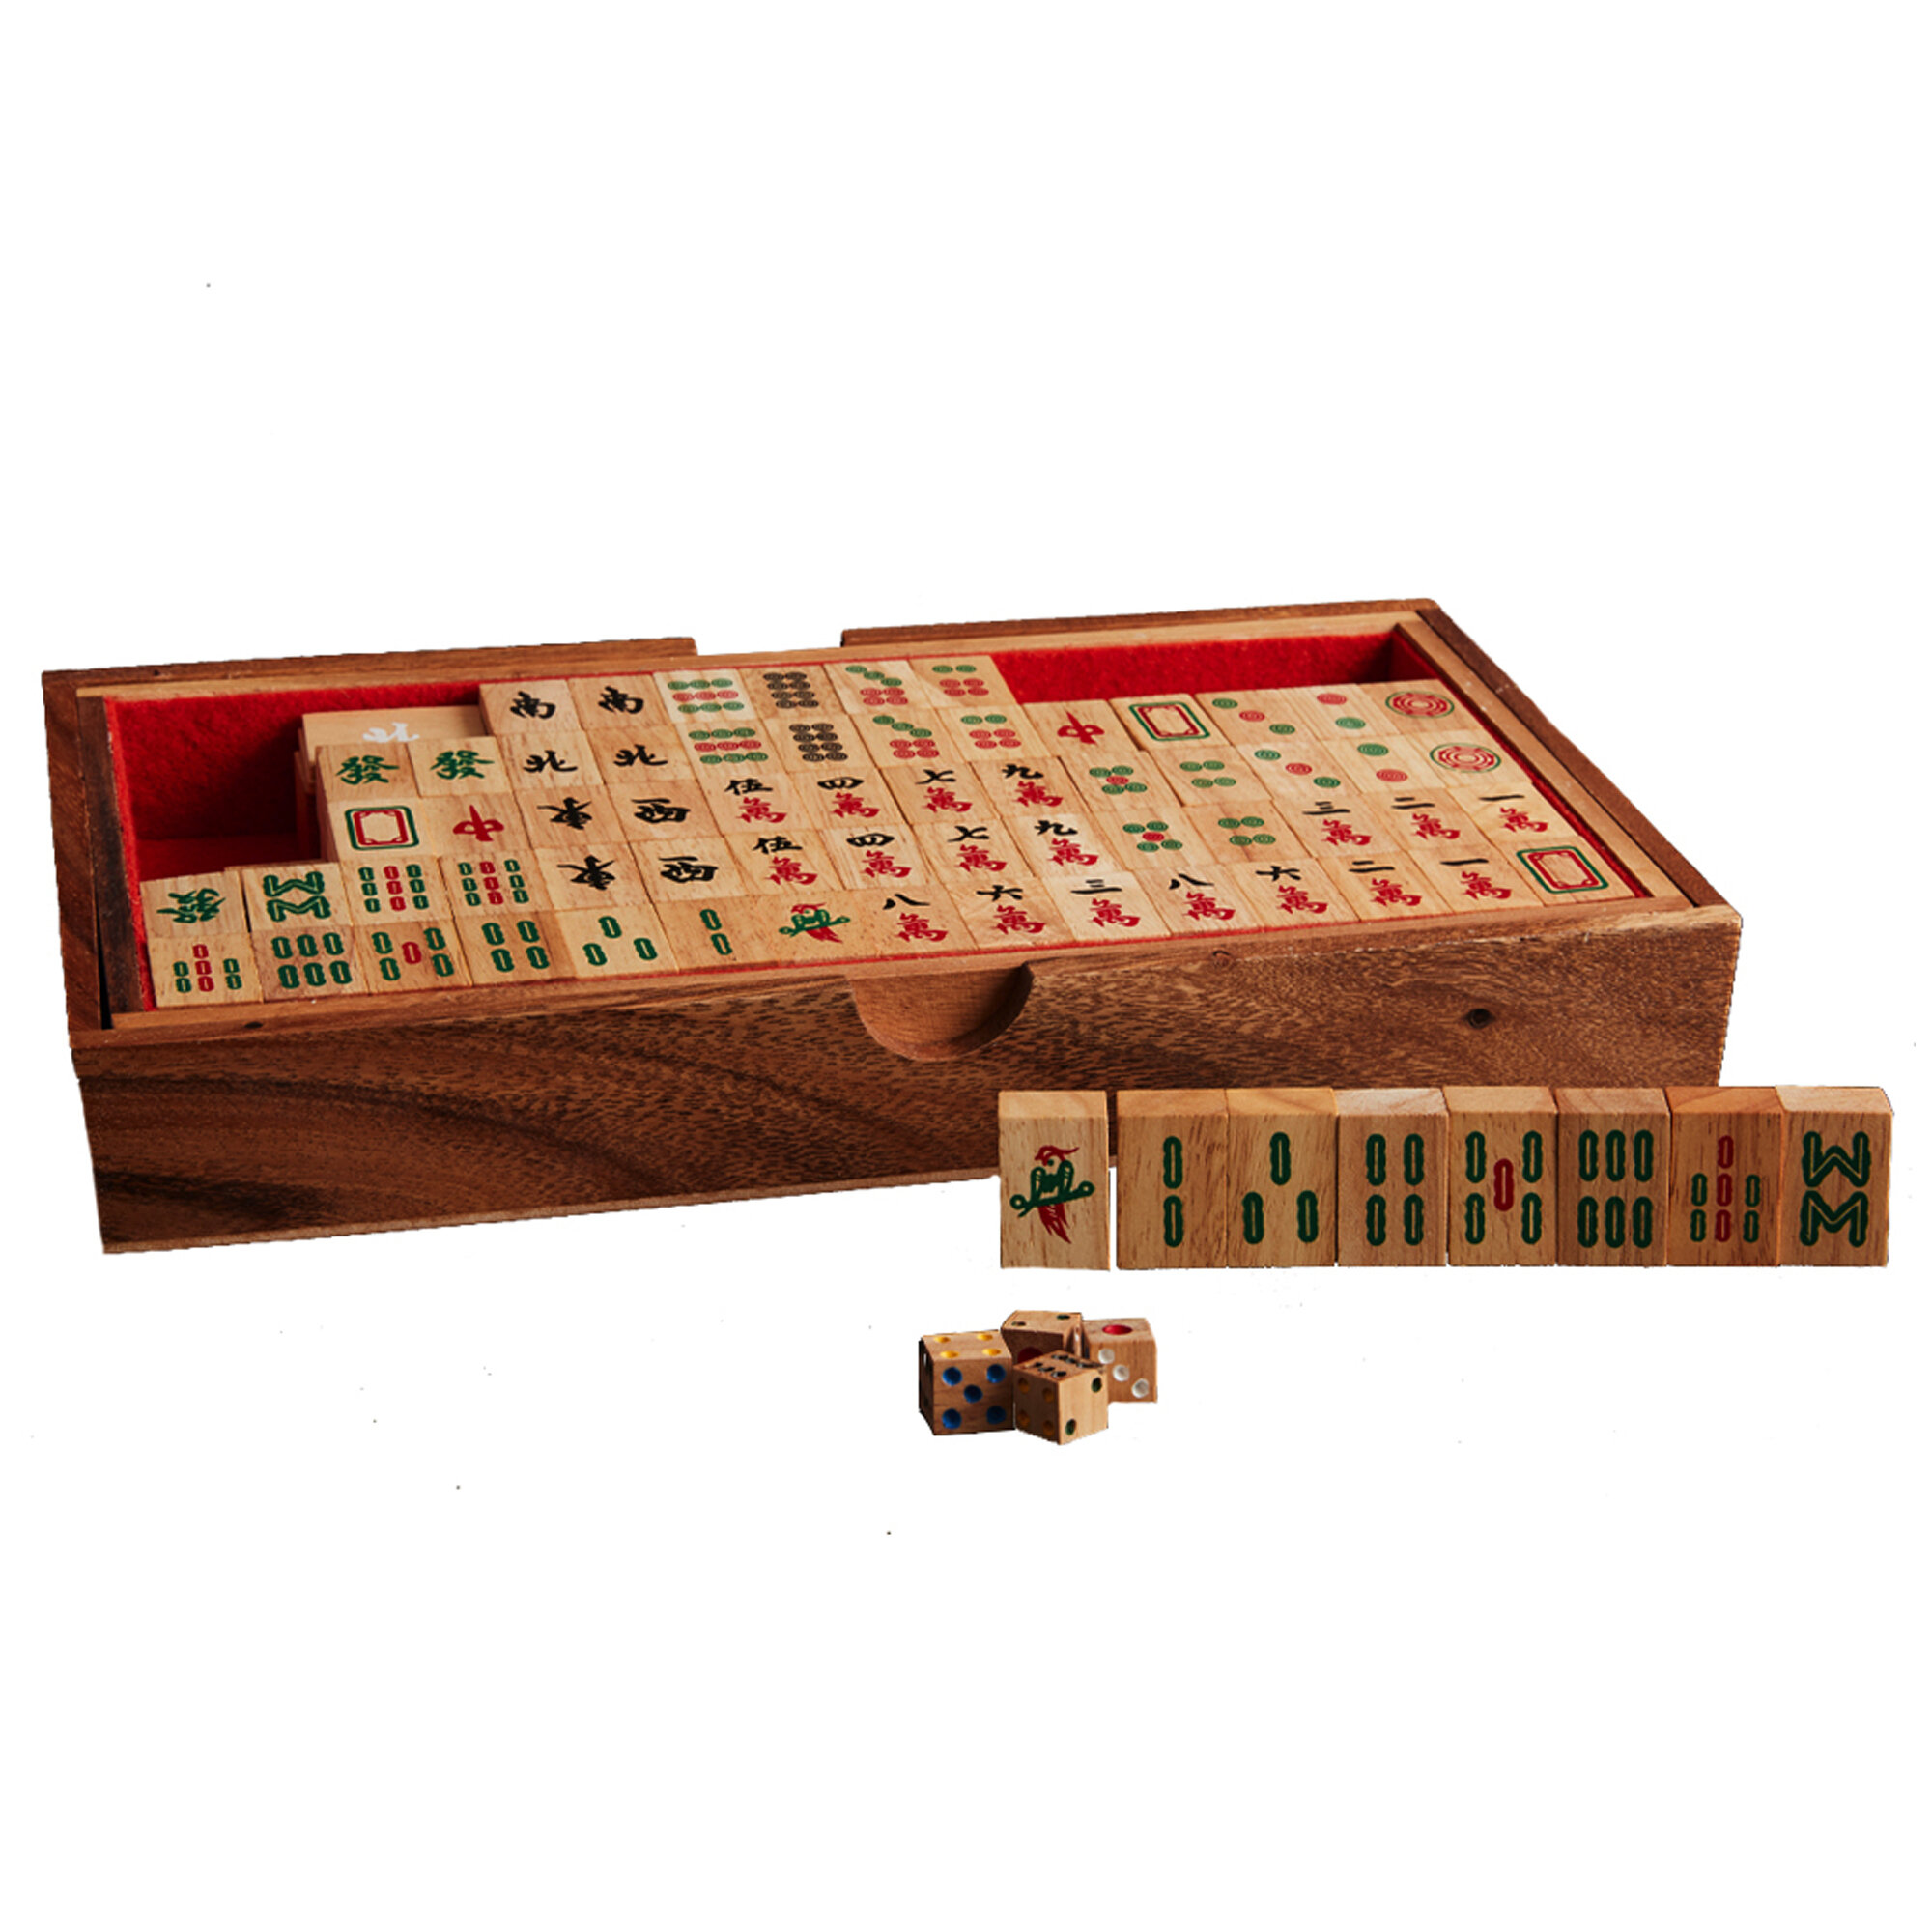 Decorative Mahjong set with Web